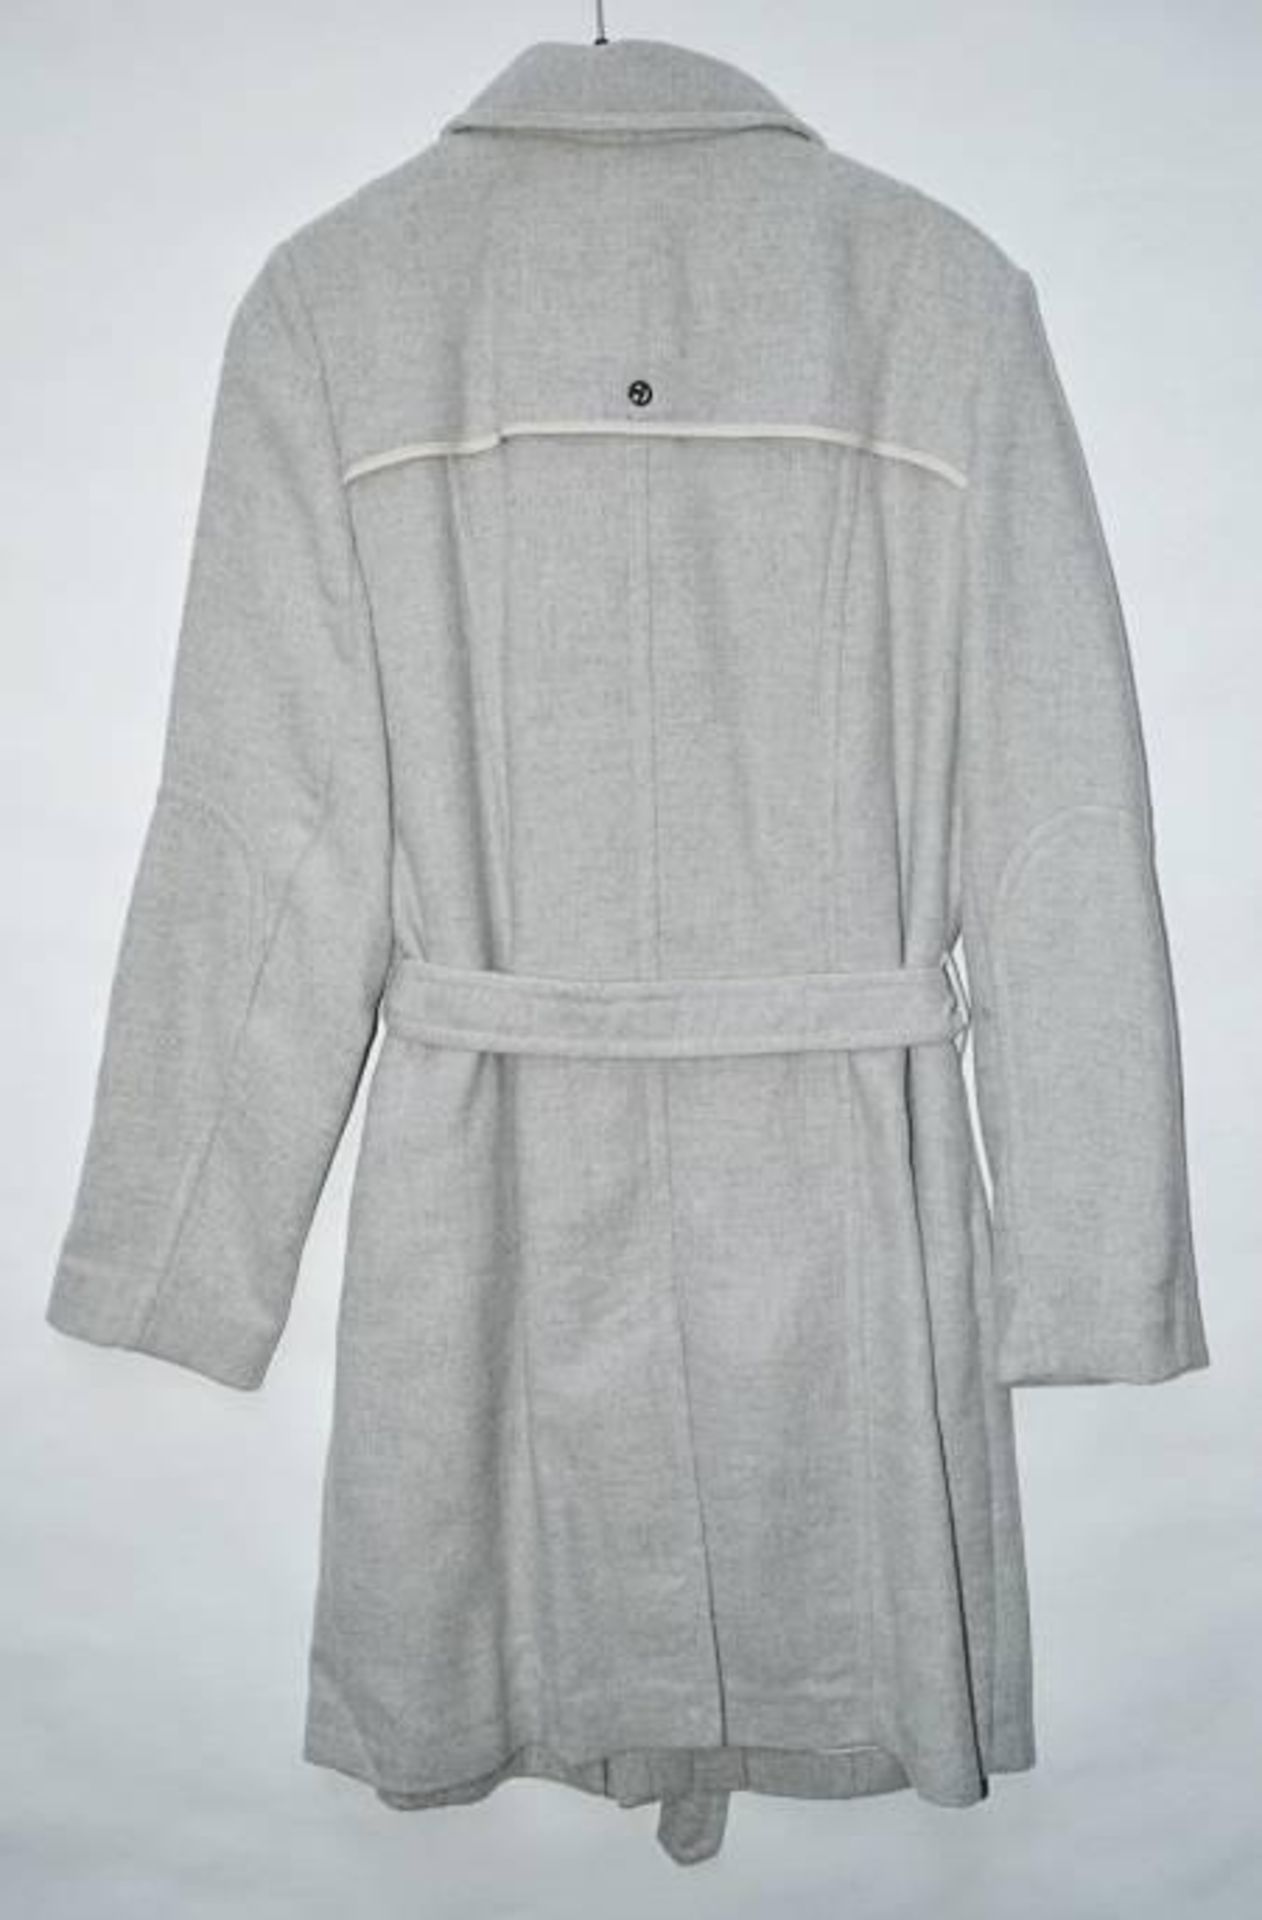 1 x Steilmann Kirsten Womens Wool Blend Belted Winter Coat In Light Grey - Size 12 - CL210 - Ref MT6 - Image 3 of 4